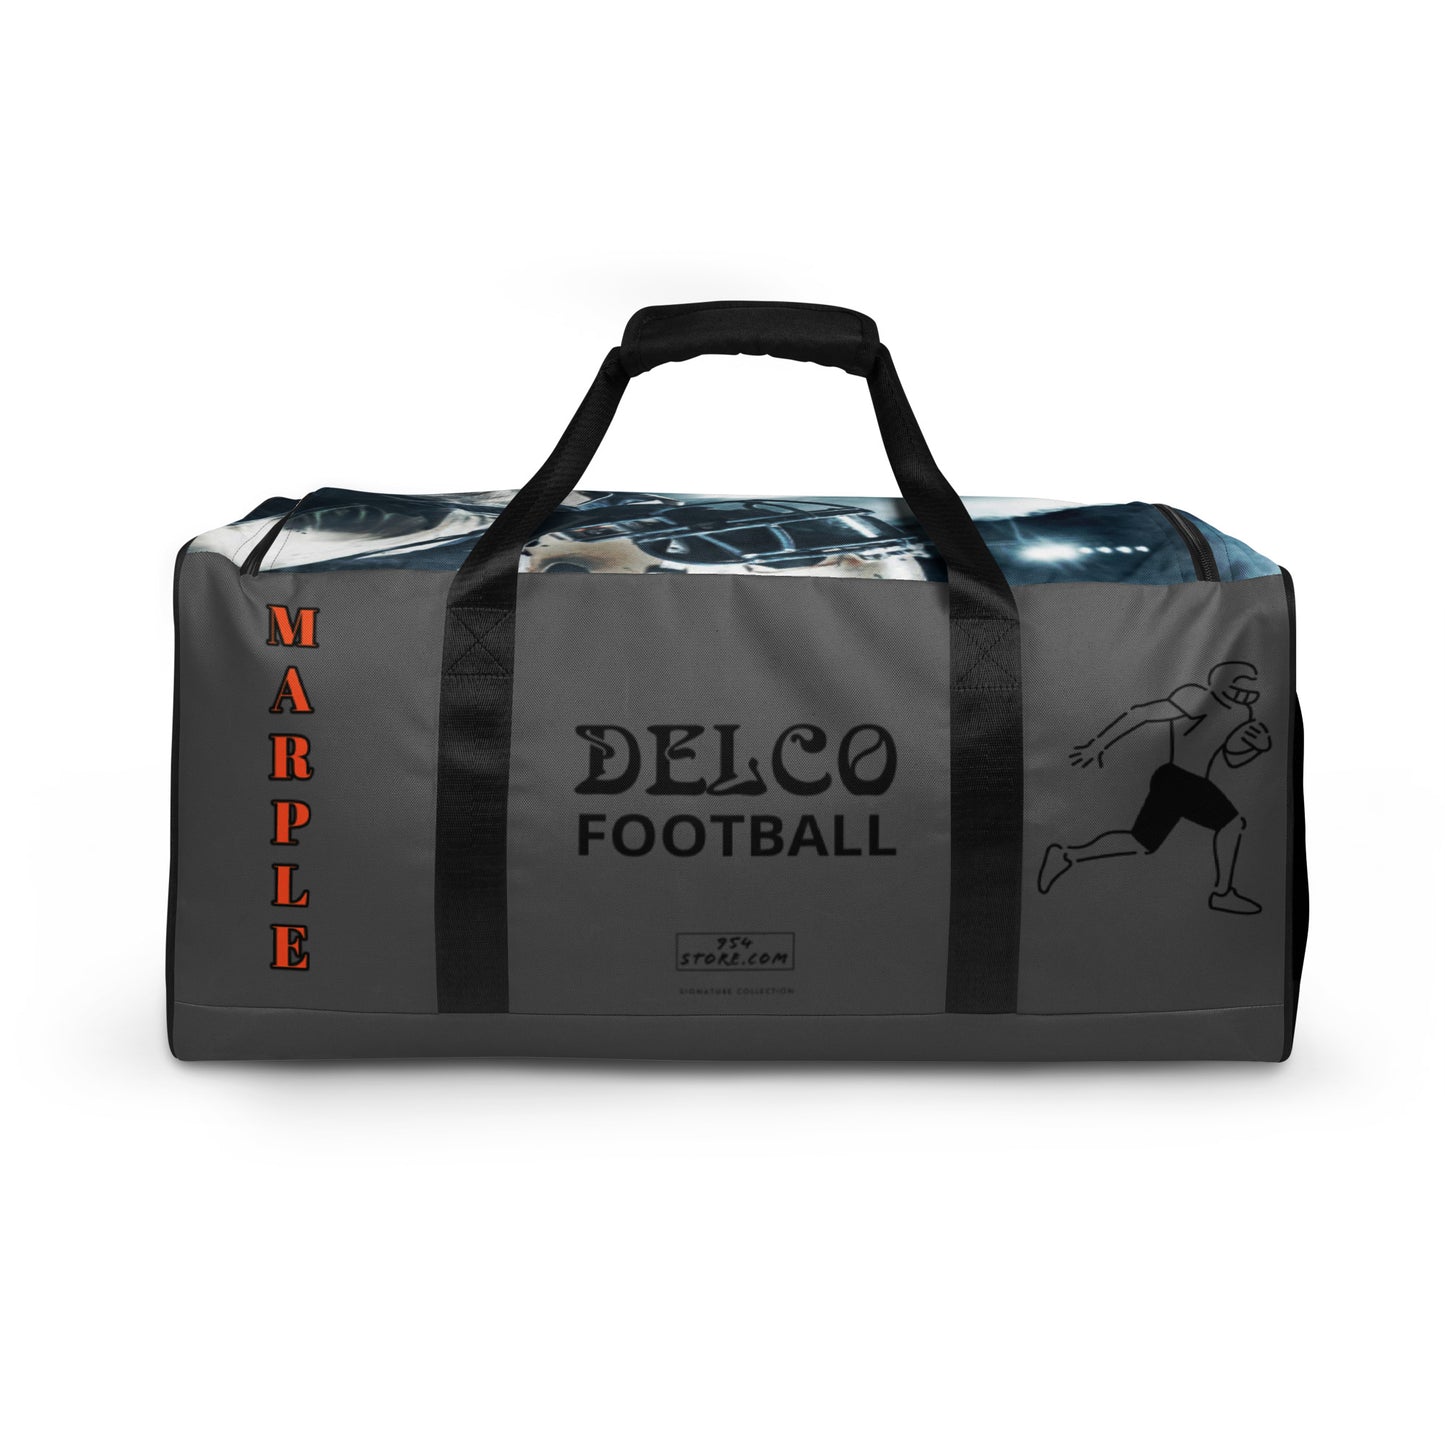 DELCO Marple 954 Duffle bag